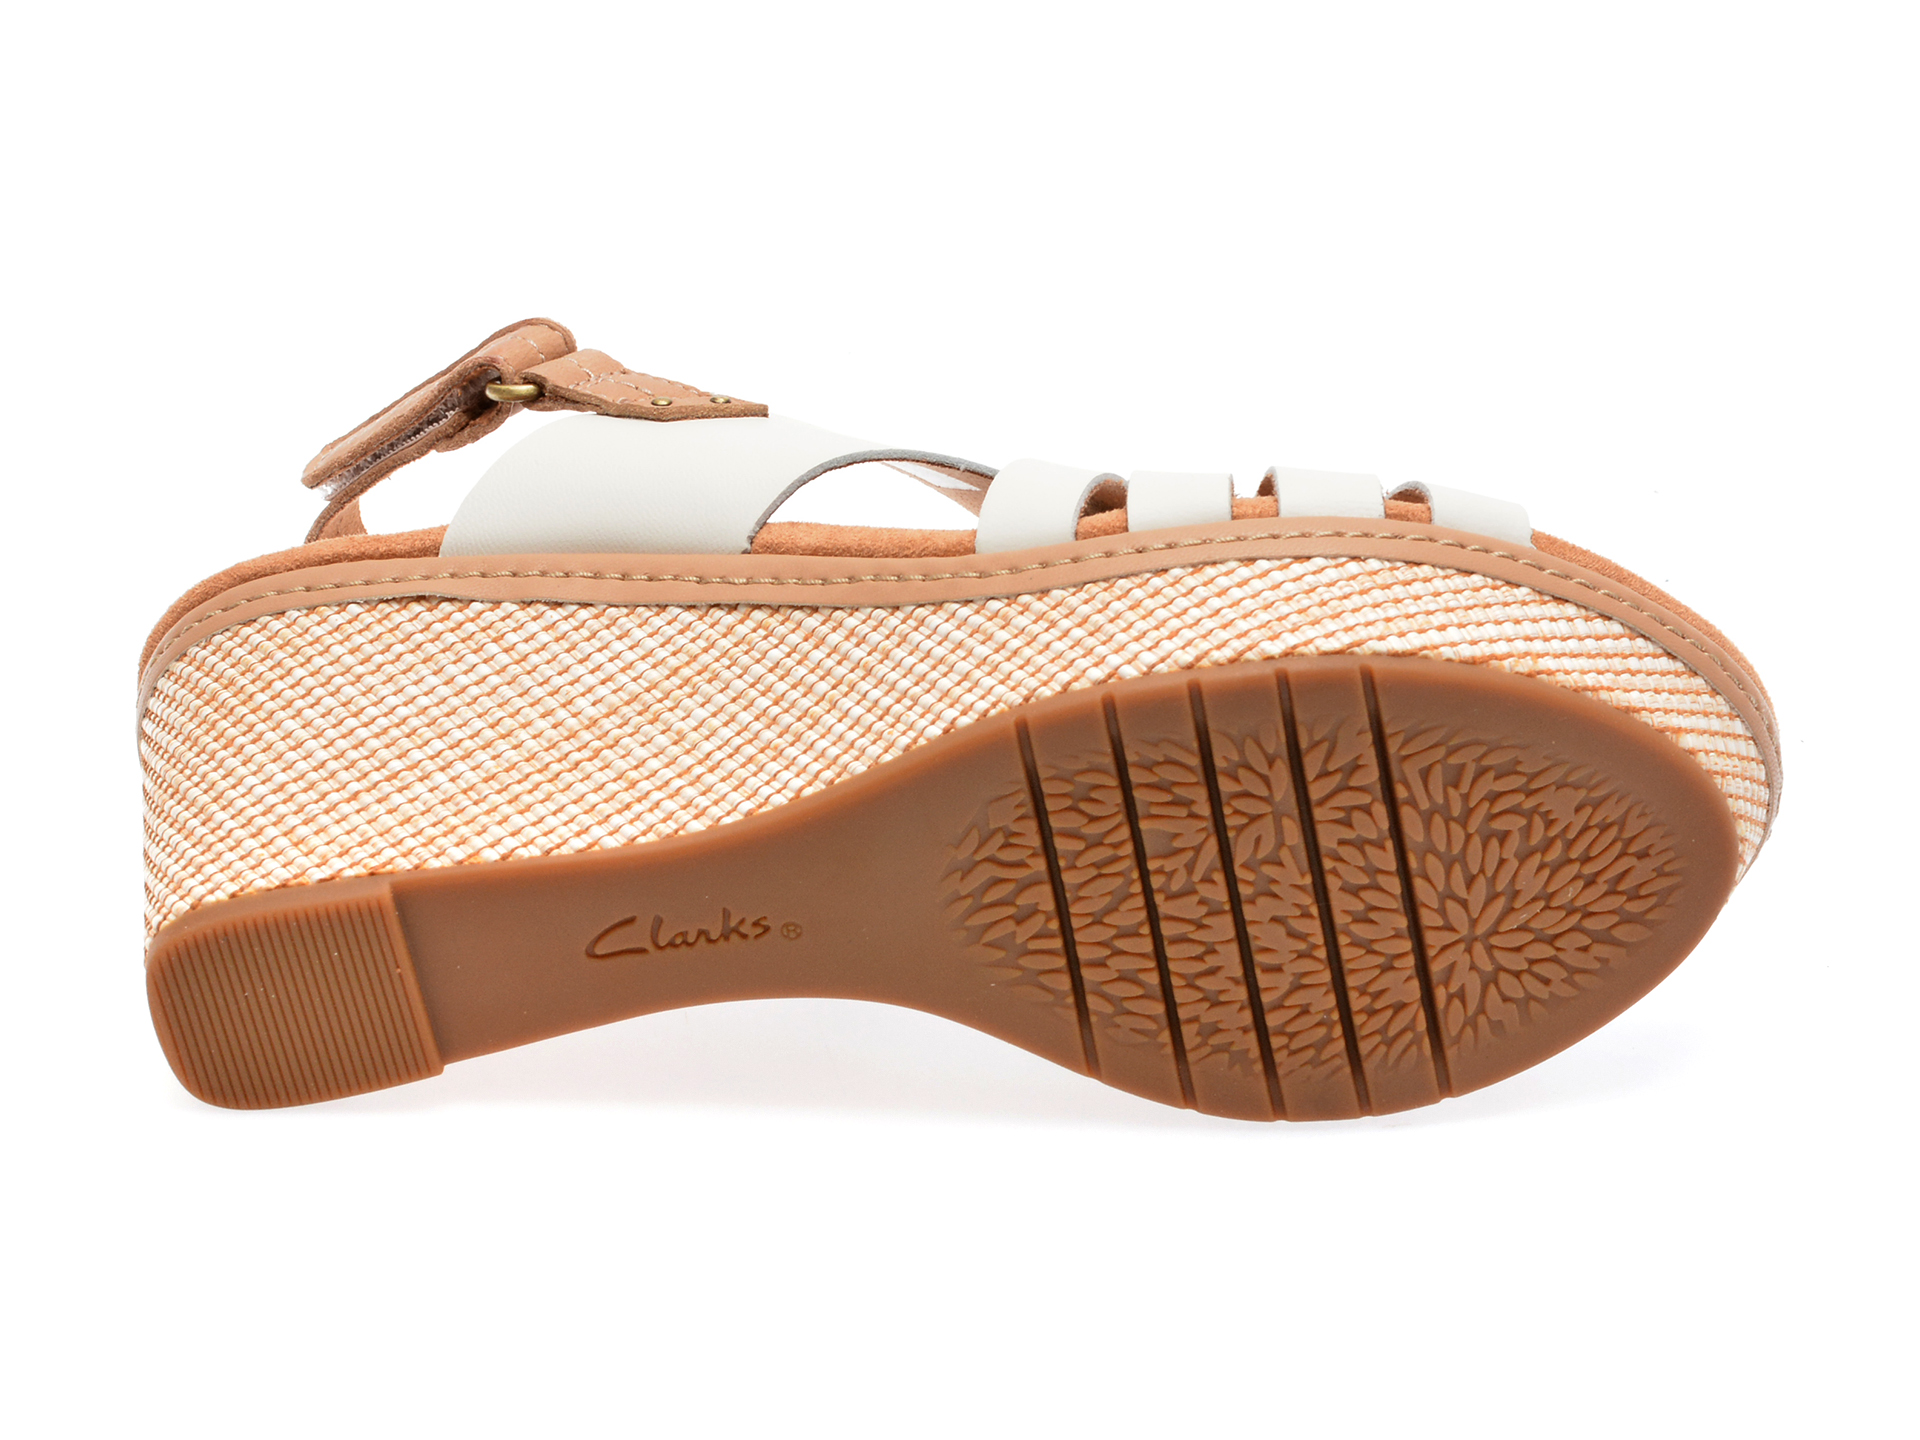 Poze Sandale CLARKS albe, ELLERI GRACE 13-N, din piele naturala otter.ro